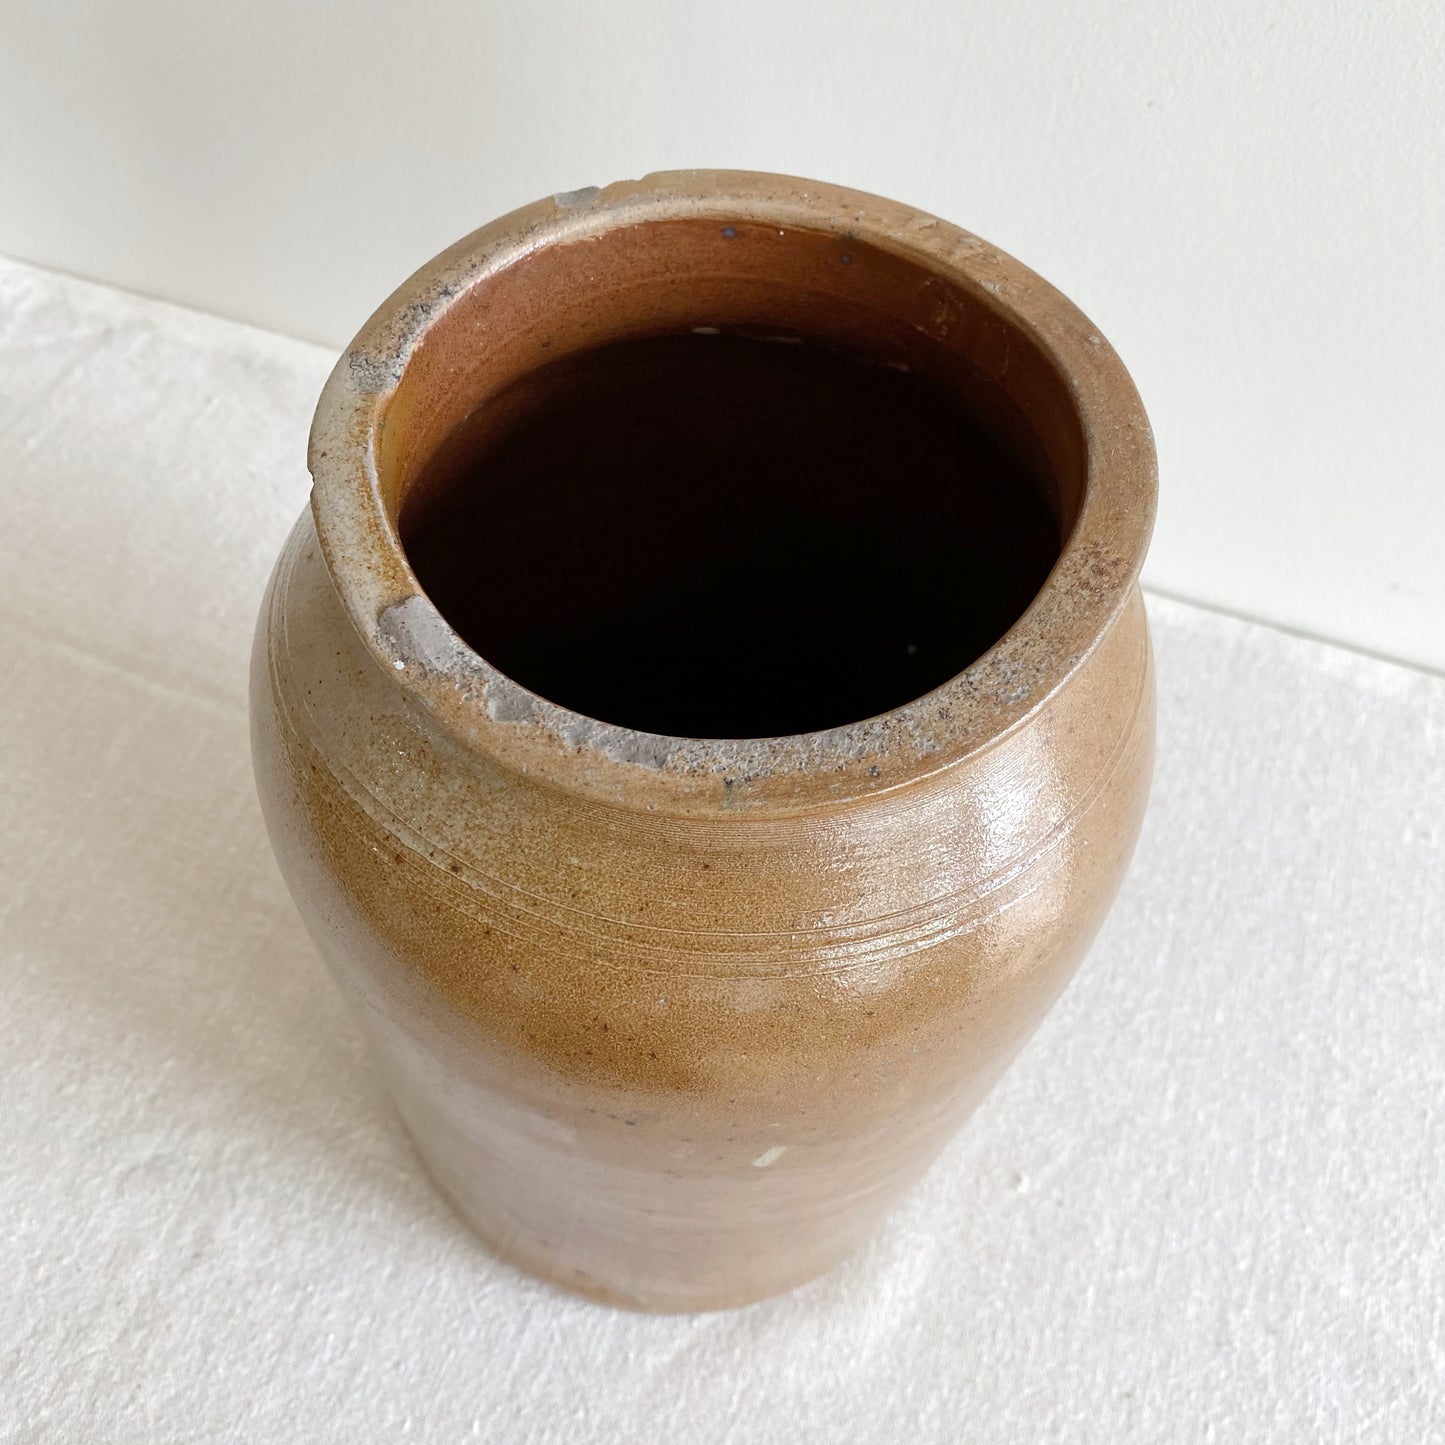 Antique Stoneware Crock Jar Vase, 10.75"